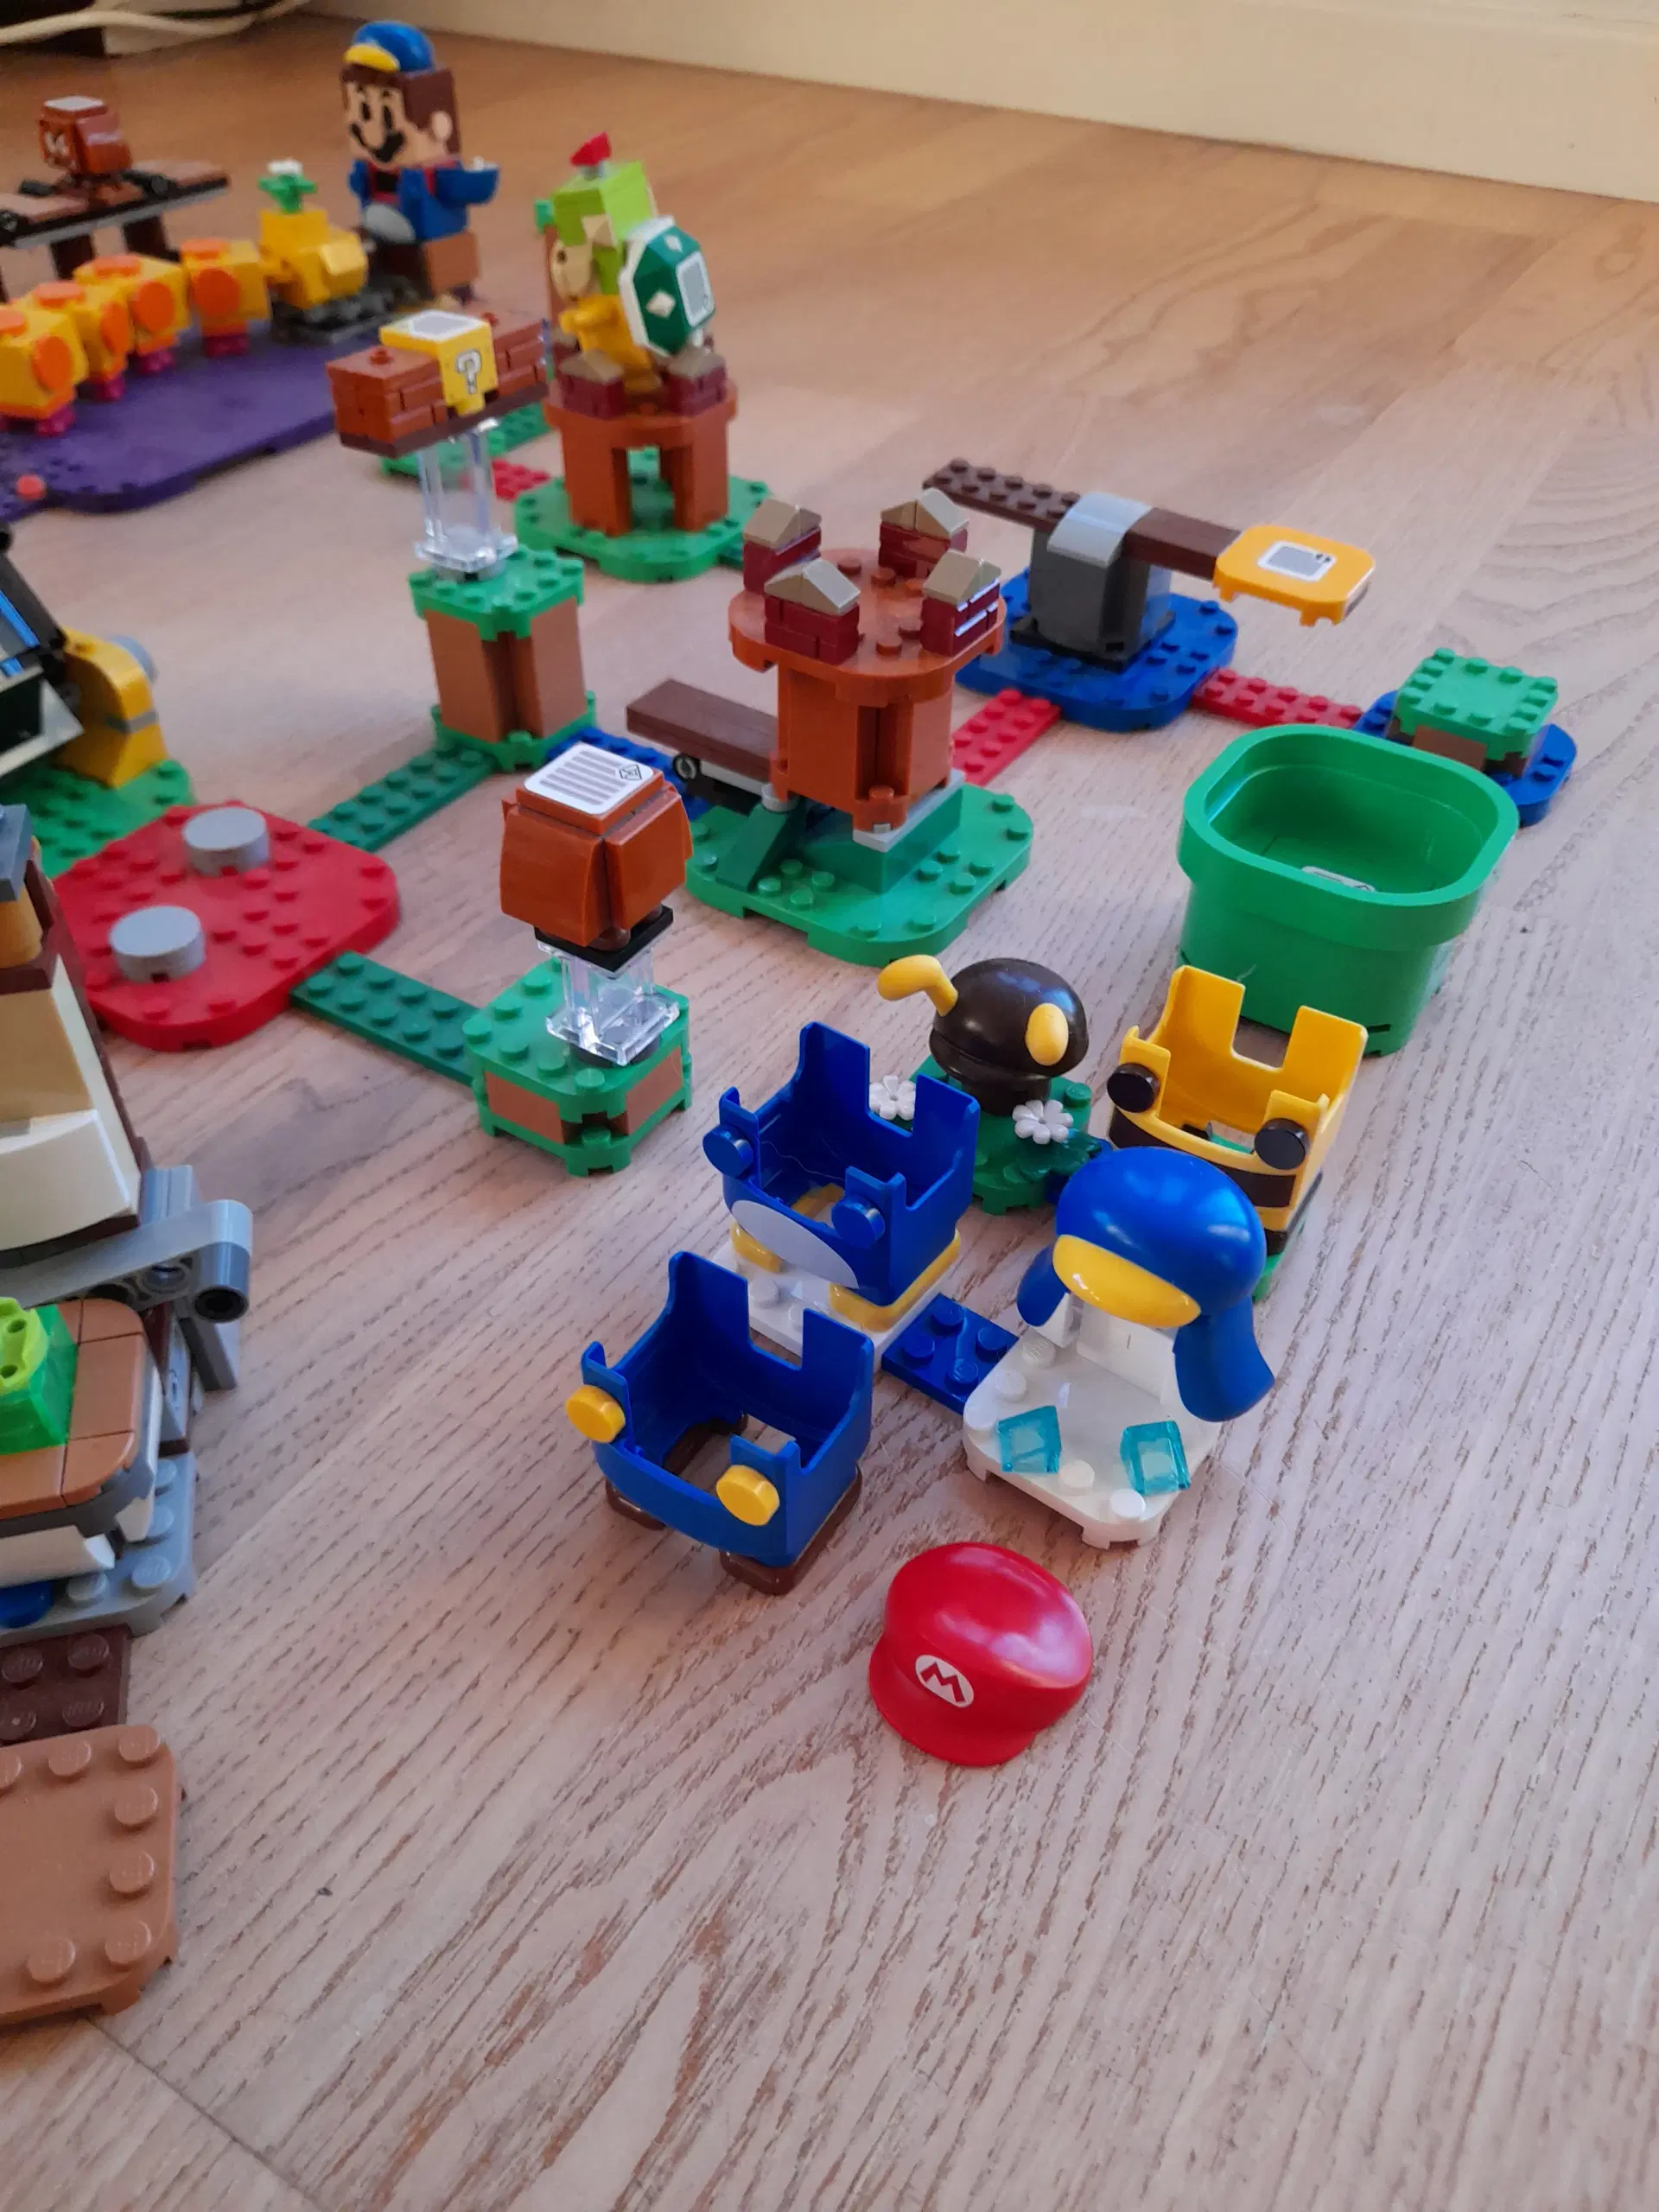 Lego Super Mario samling